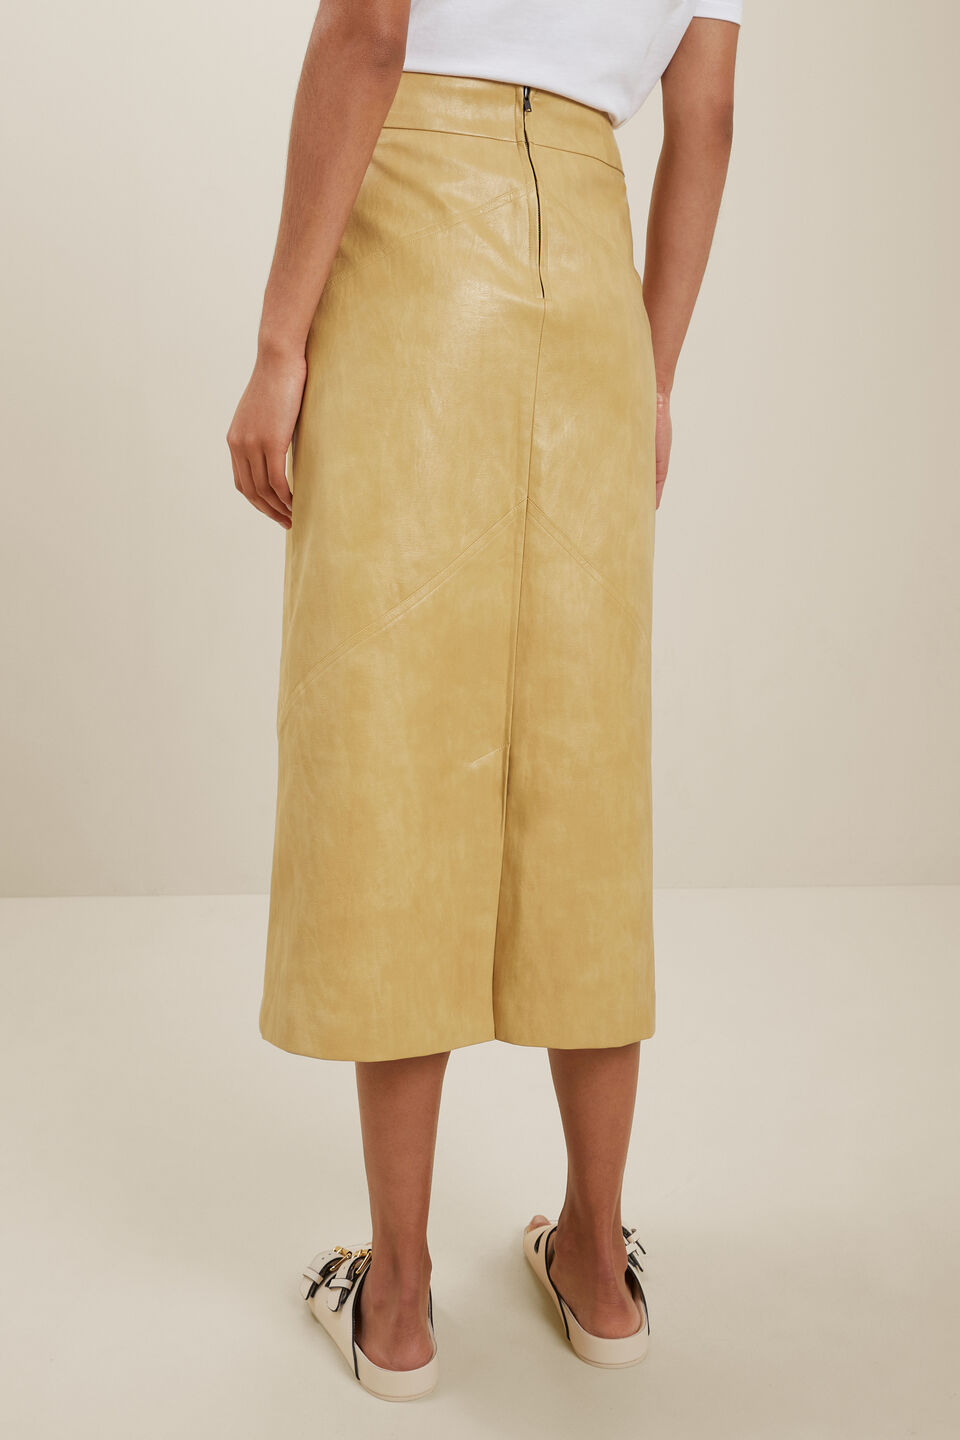 Vegan Leather Panel Midi Skirt  Fawn  hi-res